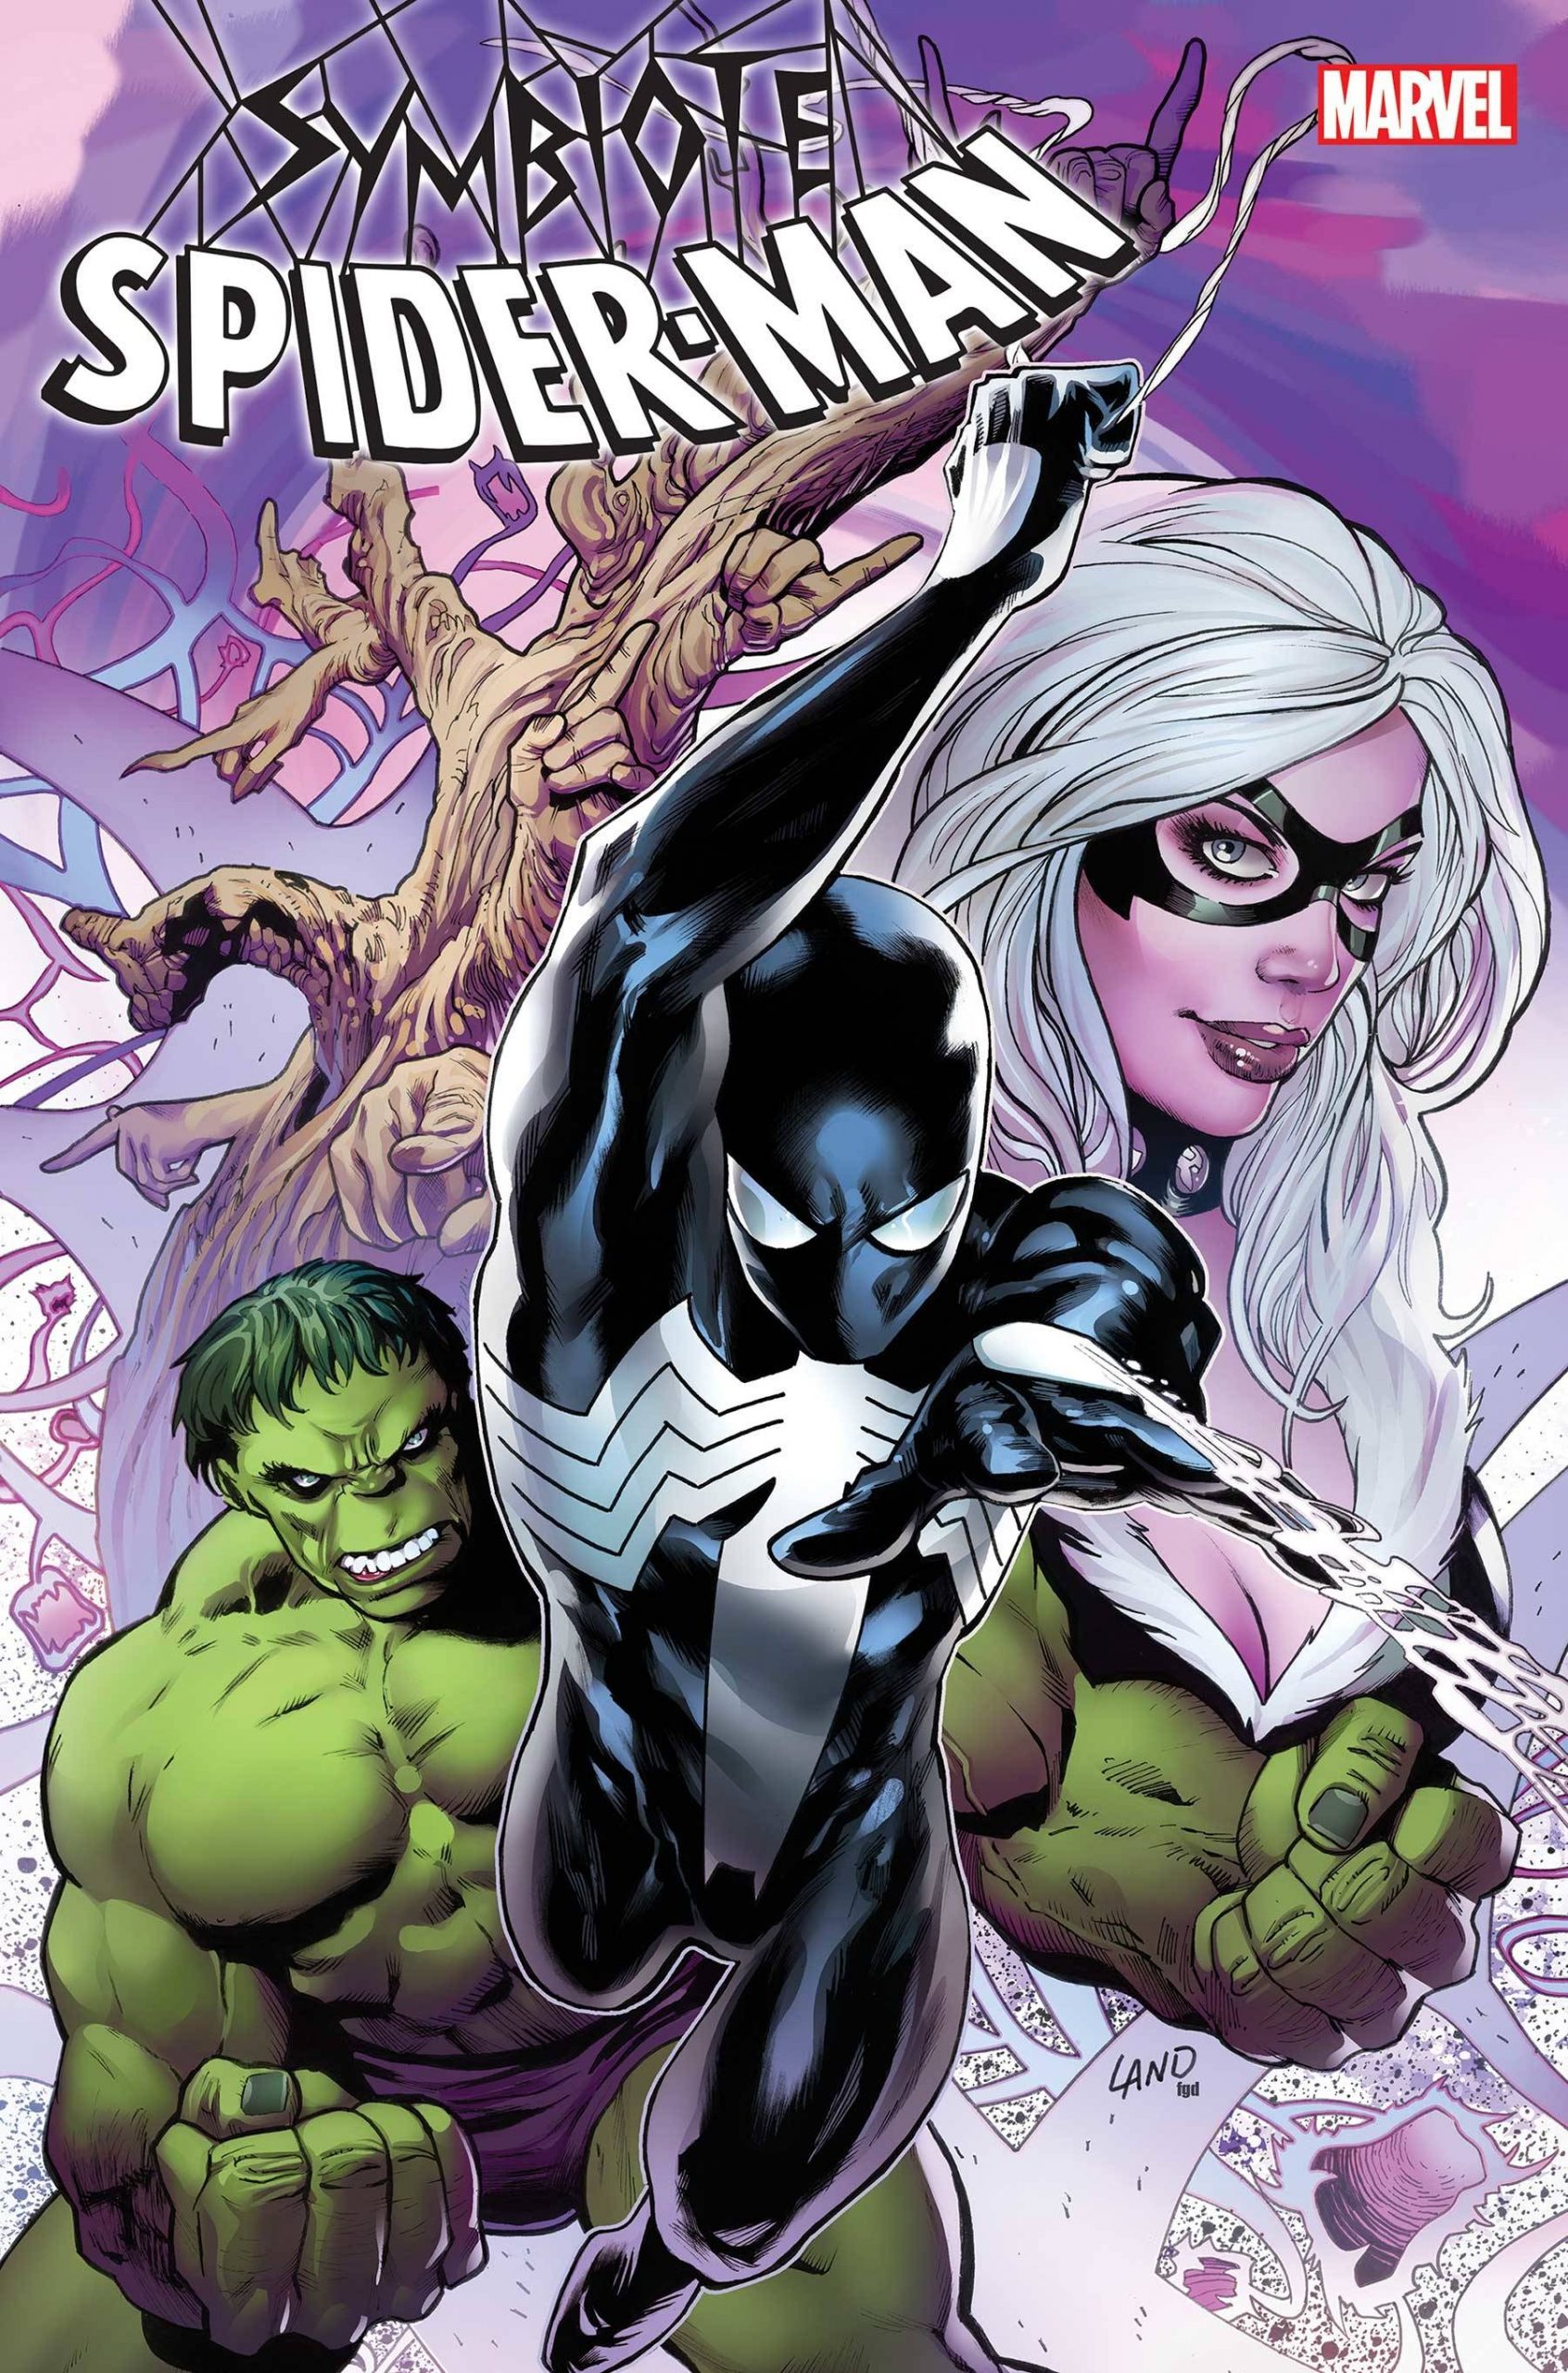 Marvel Preview: Symbiote Spider-Man: Crossroads #1